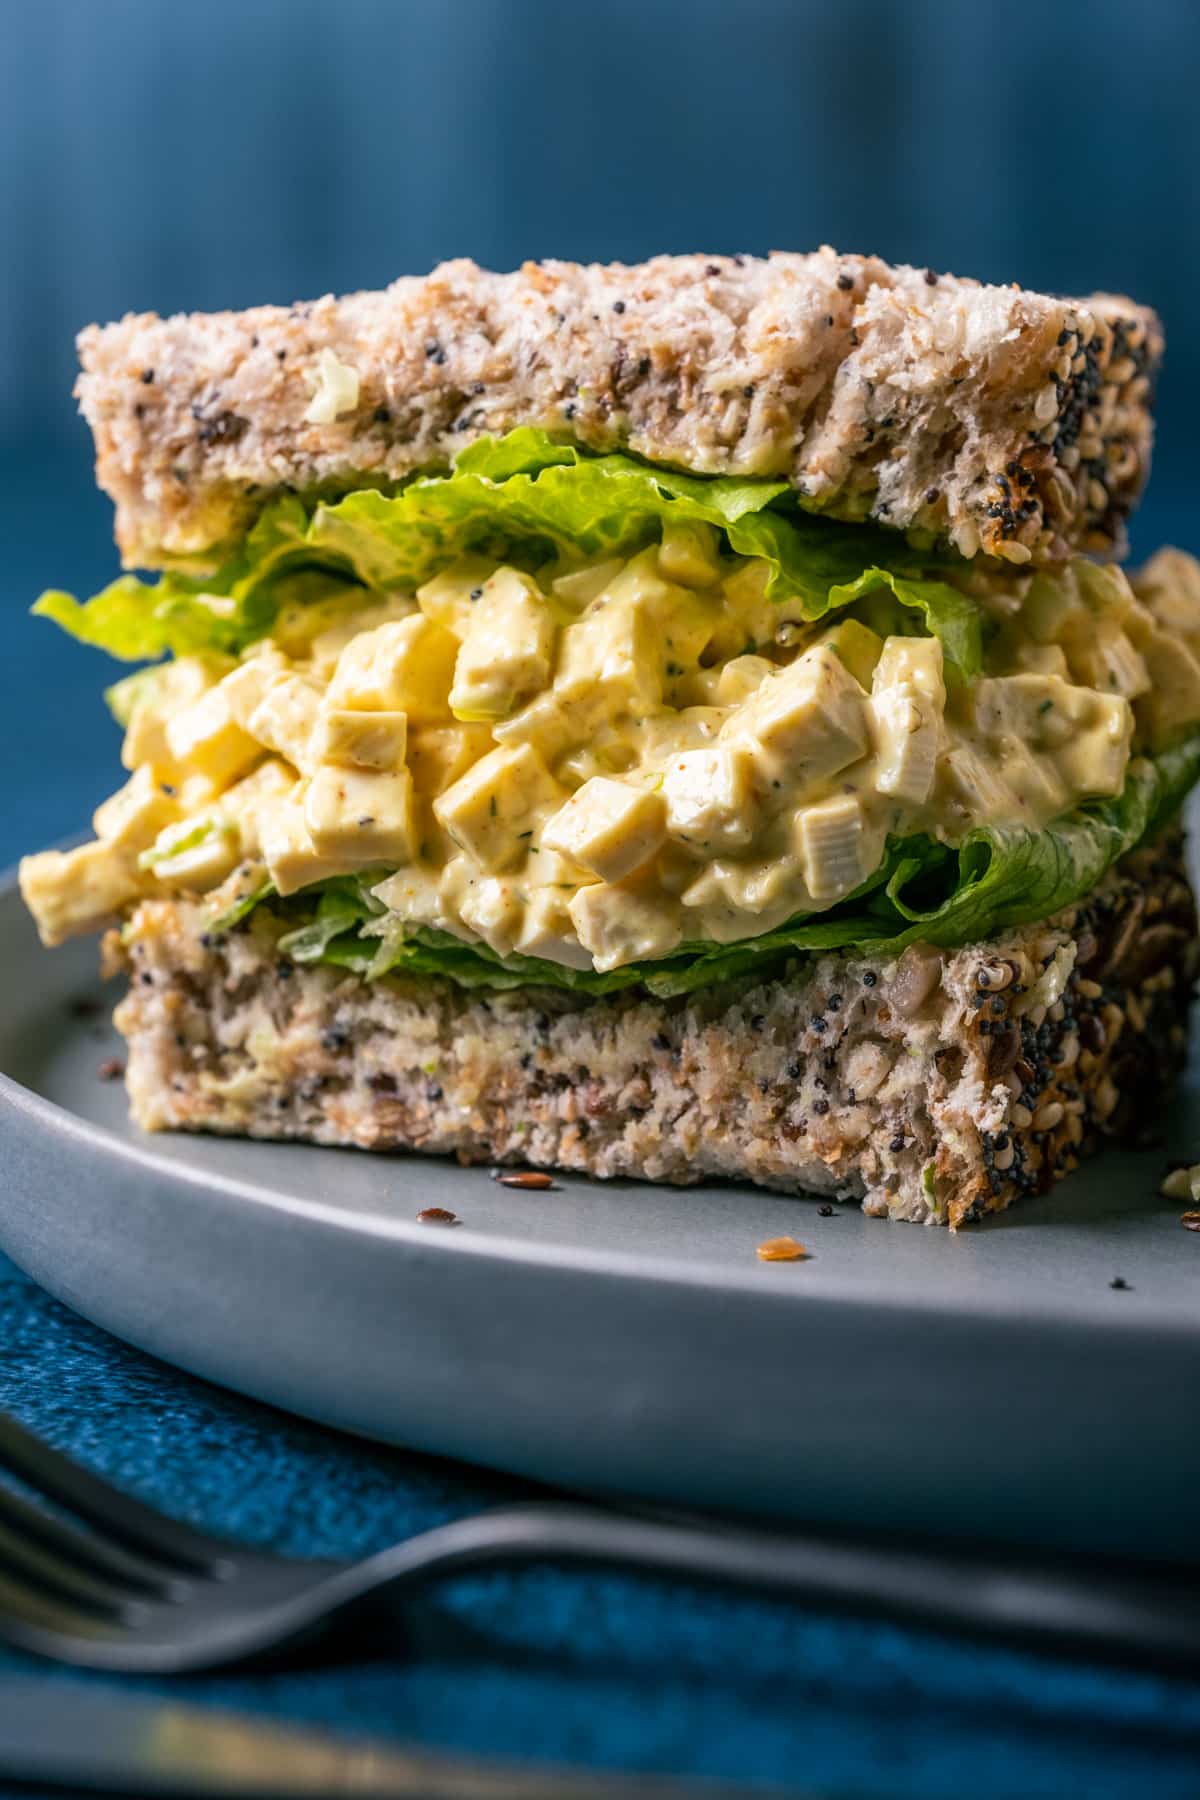 Vegan egg salad sandwich cut in half on a gray plate.